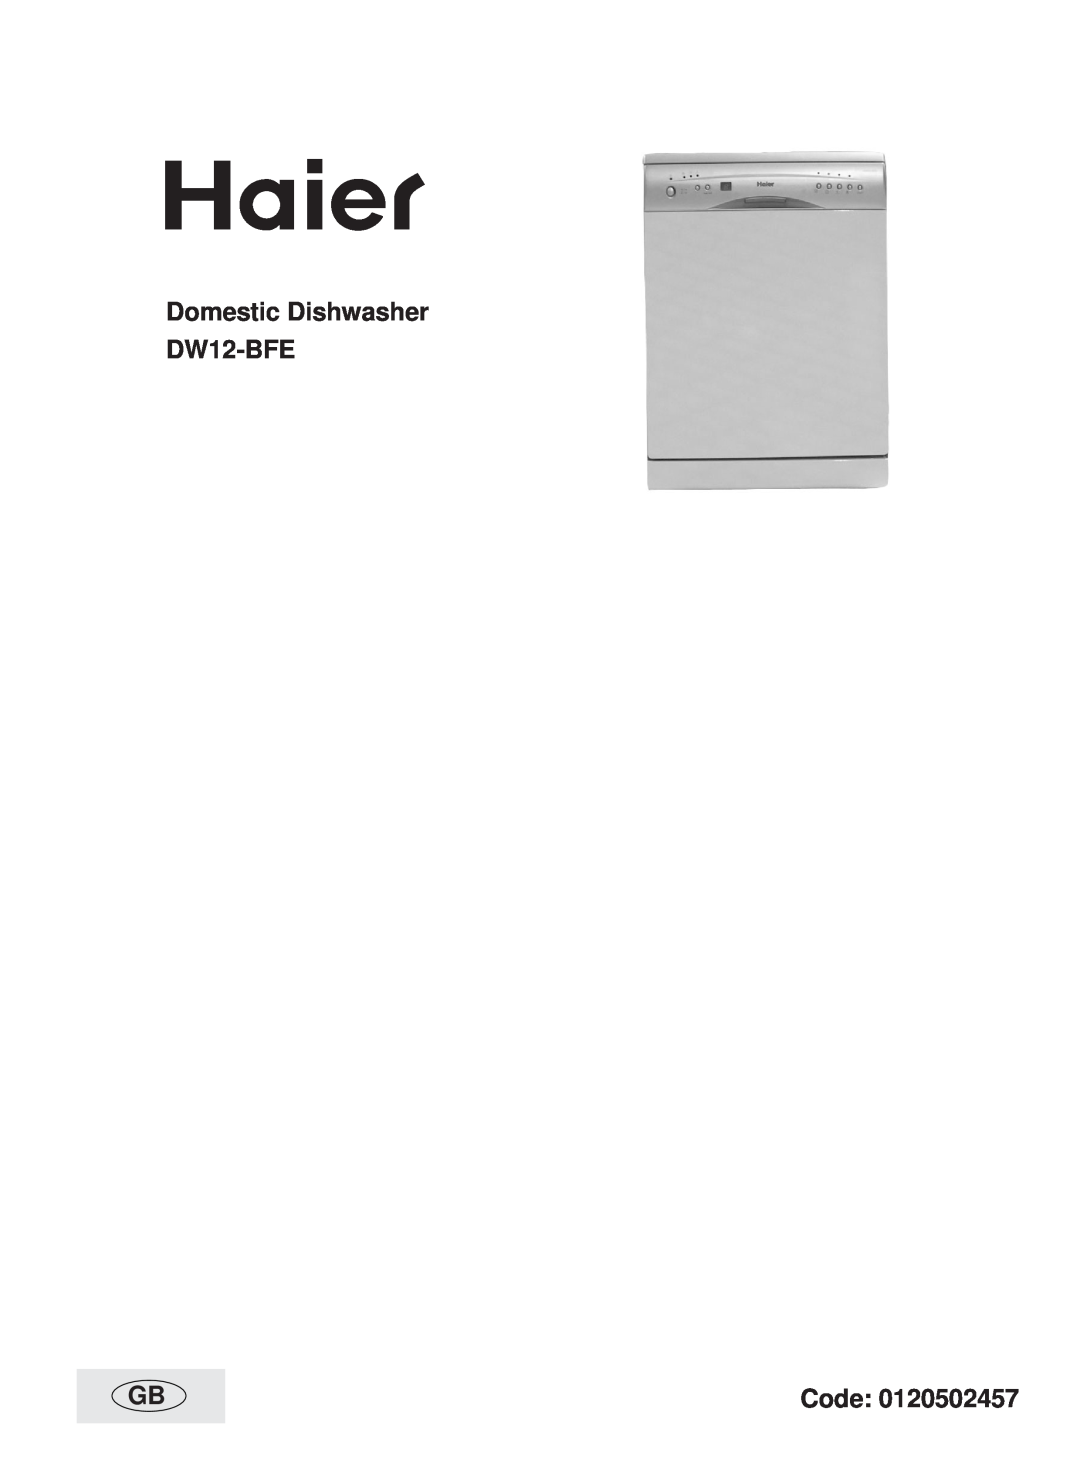 Haier manual Domestic Dishwasher DW12-BFE, Code 